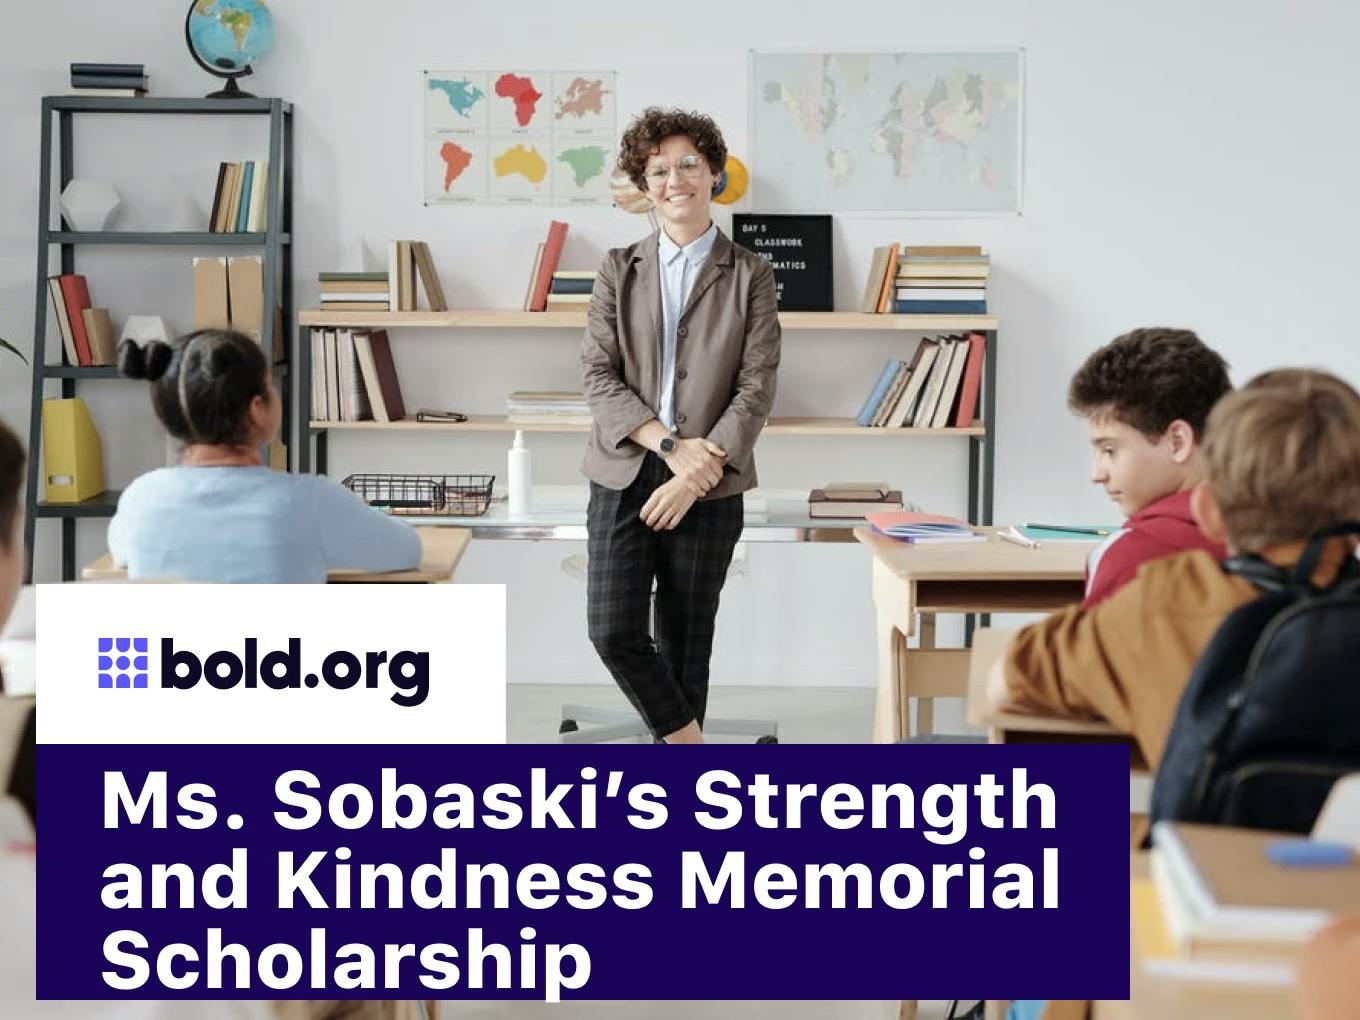 Ms. Sobaski’s Strength and Kindness Memorial Scholarship